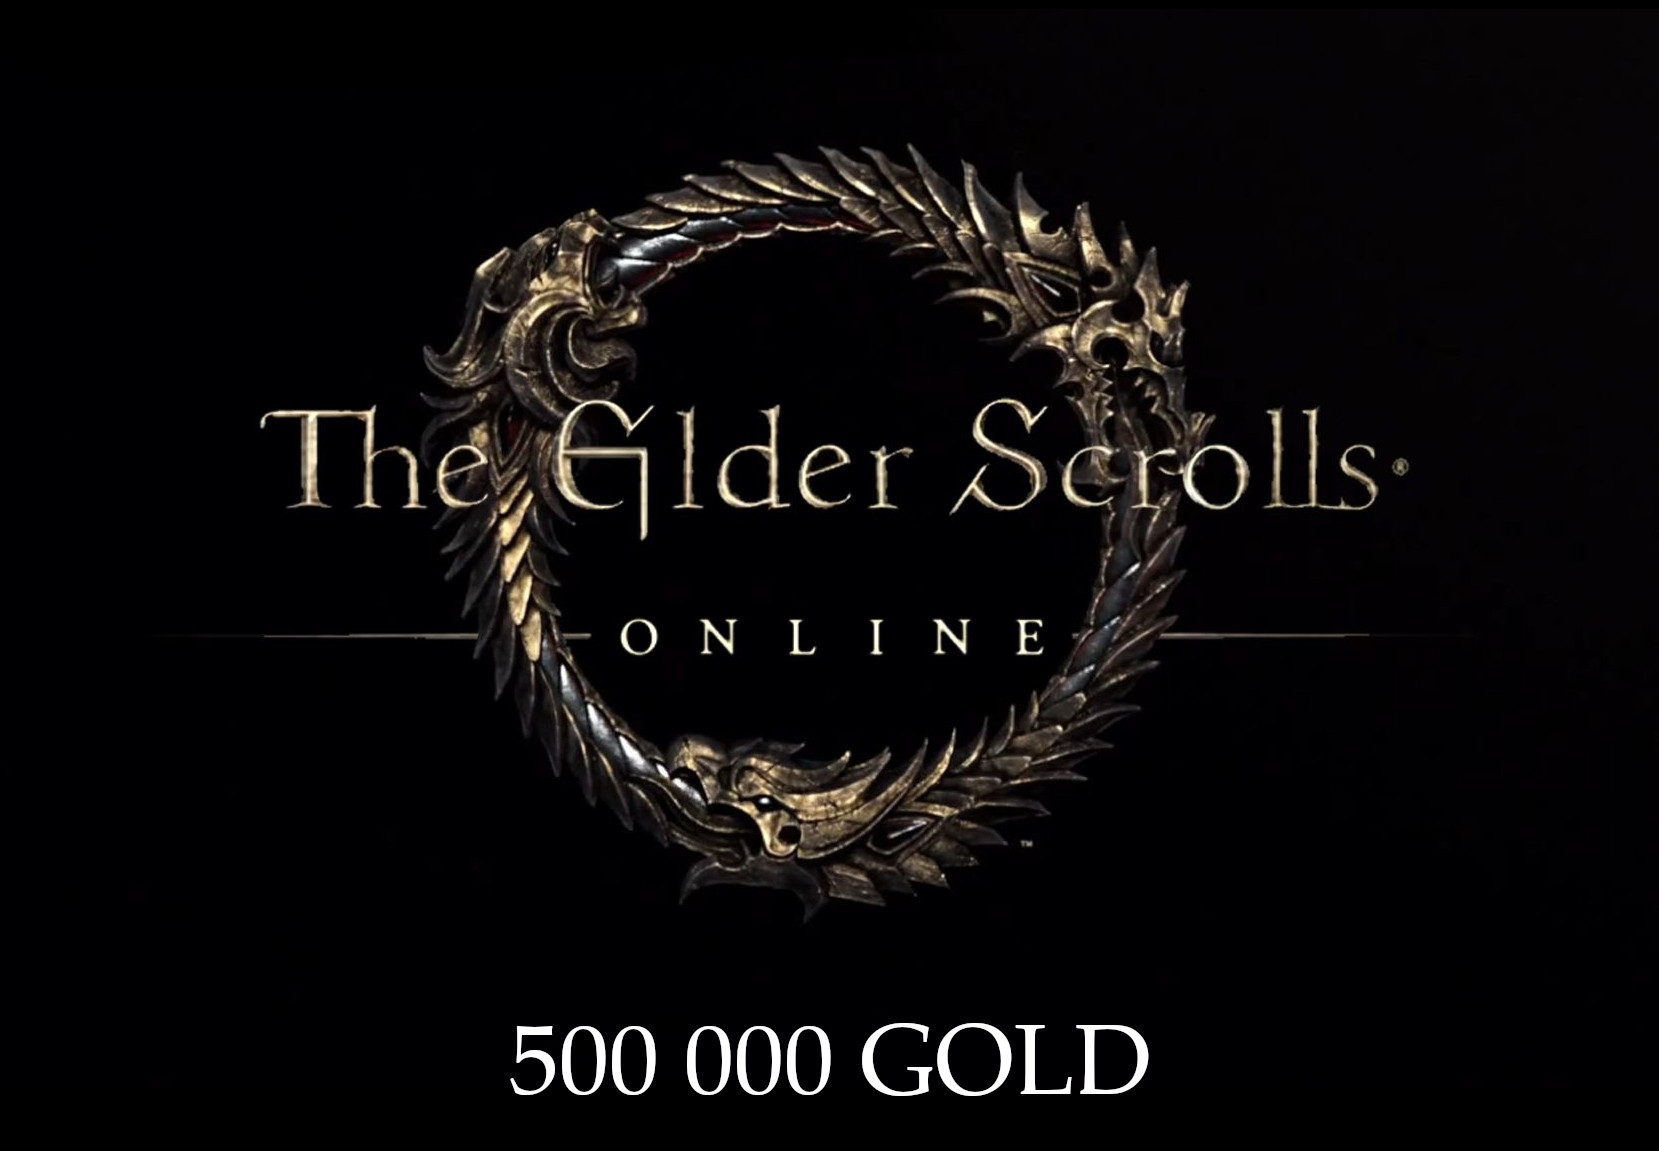 The Elder Scrolls Online - 500k Gold - NORTH AMERICA PC/MAC